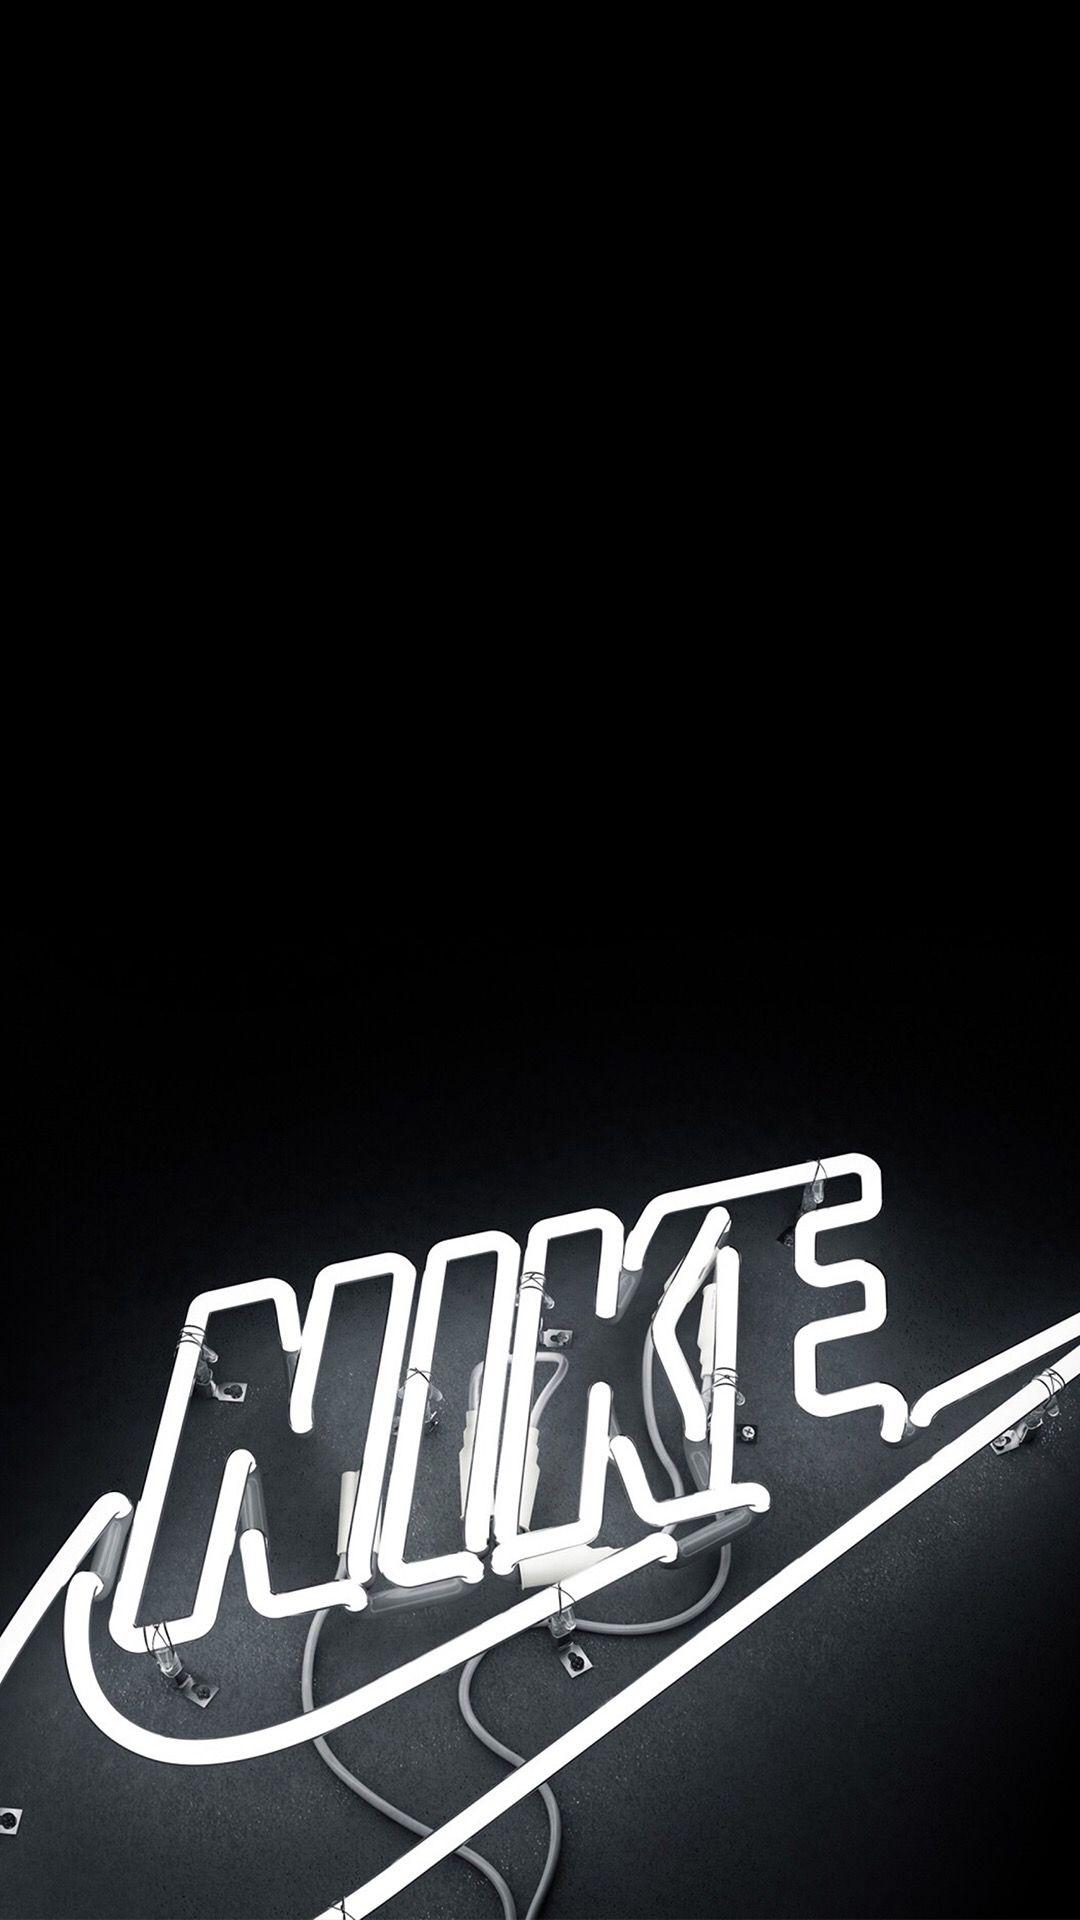 Nike Aesthetic Wallpapers